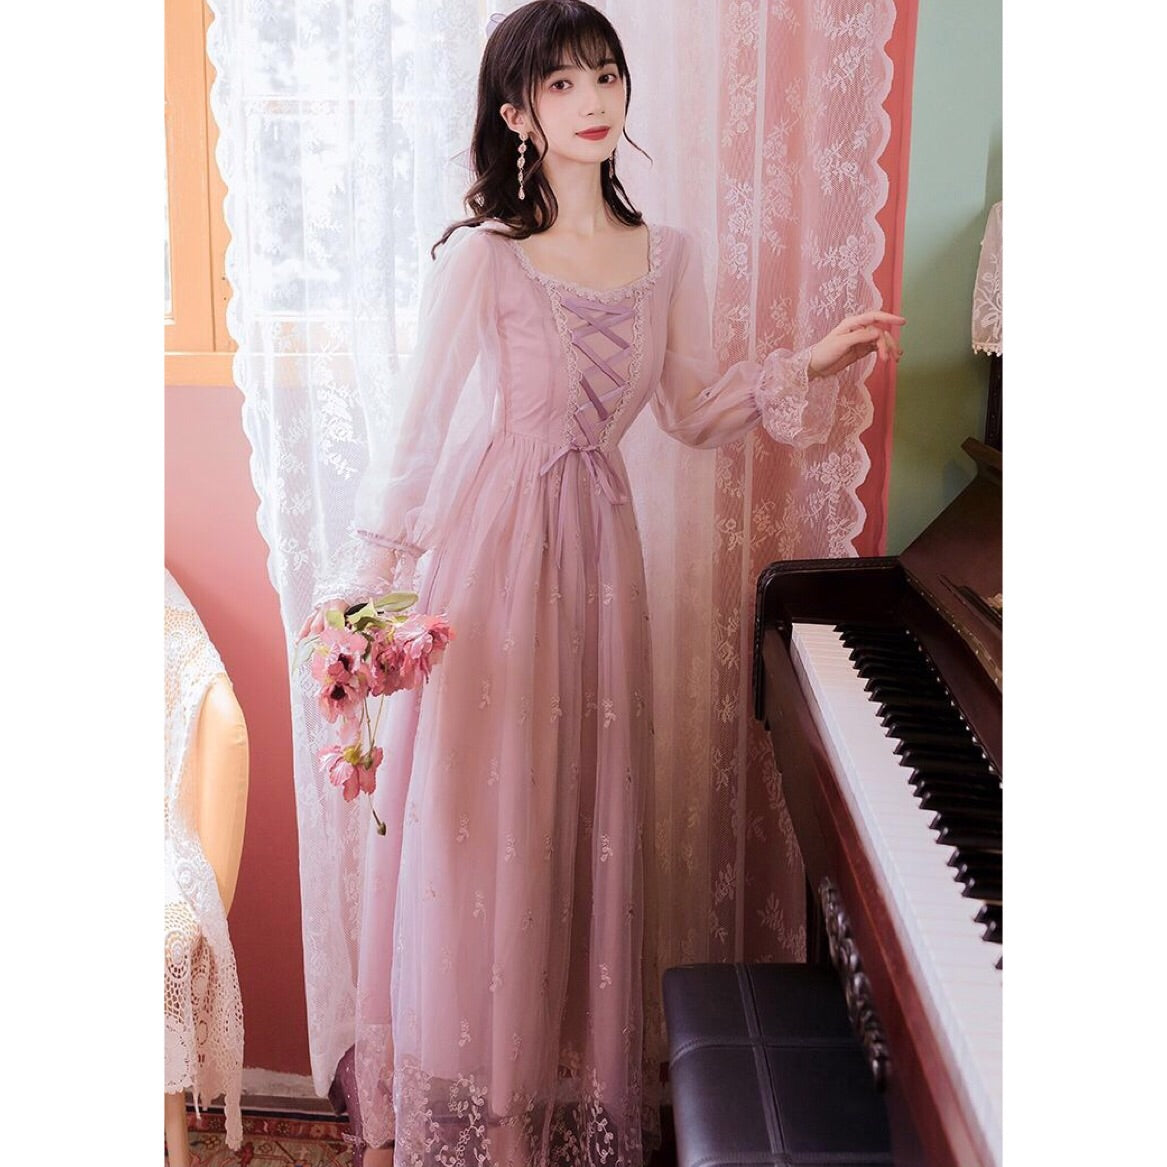 Misty Grace Romantic Vintage-Style Lace Fairy Princess Dress 